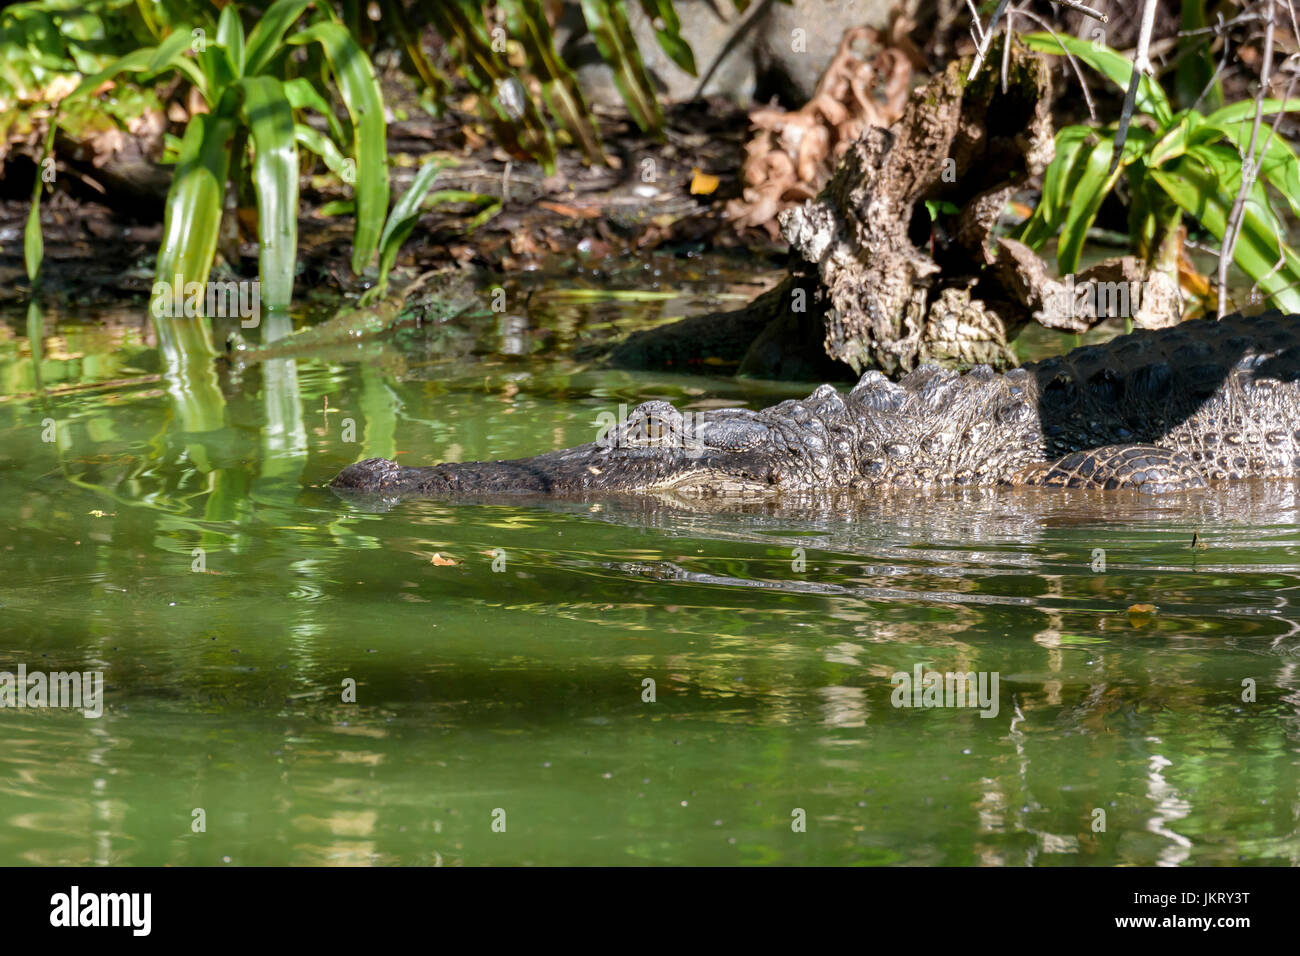 American alligator (Alligator mississippiensis) Big Cypress Bend, Fakahatchee Strand, Florida, USA Stockfoto